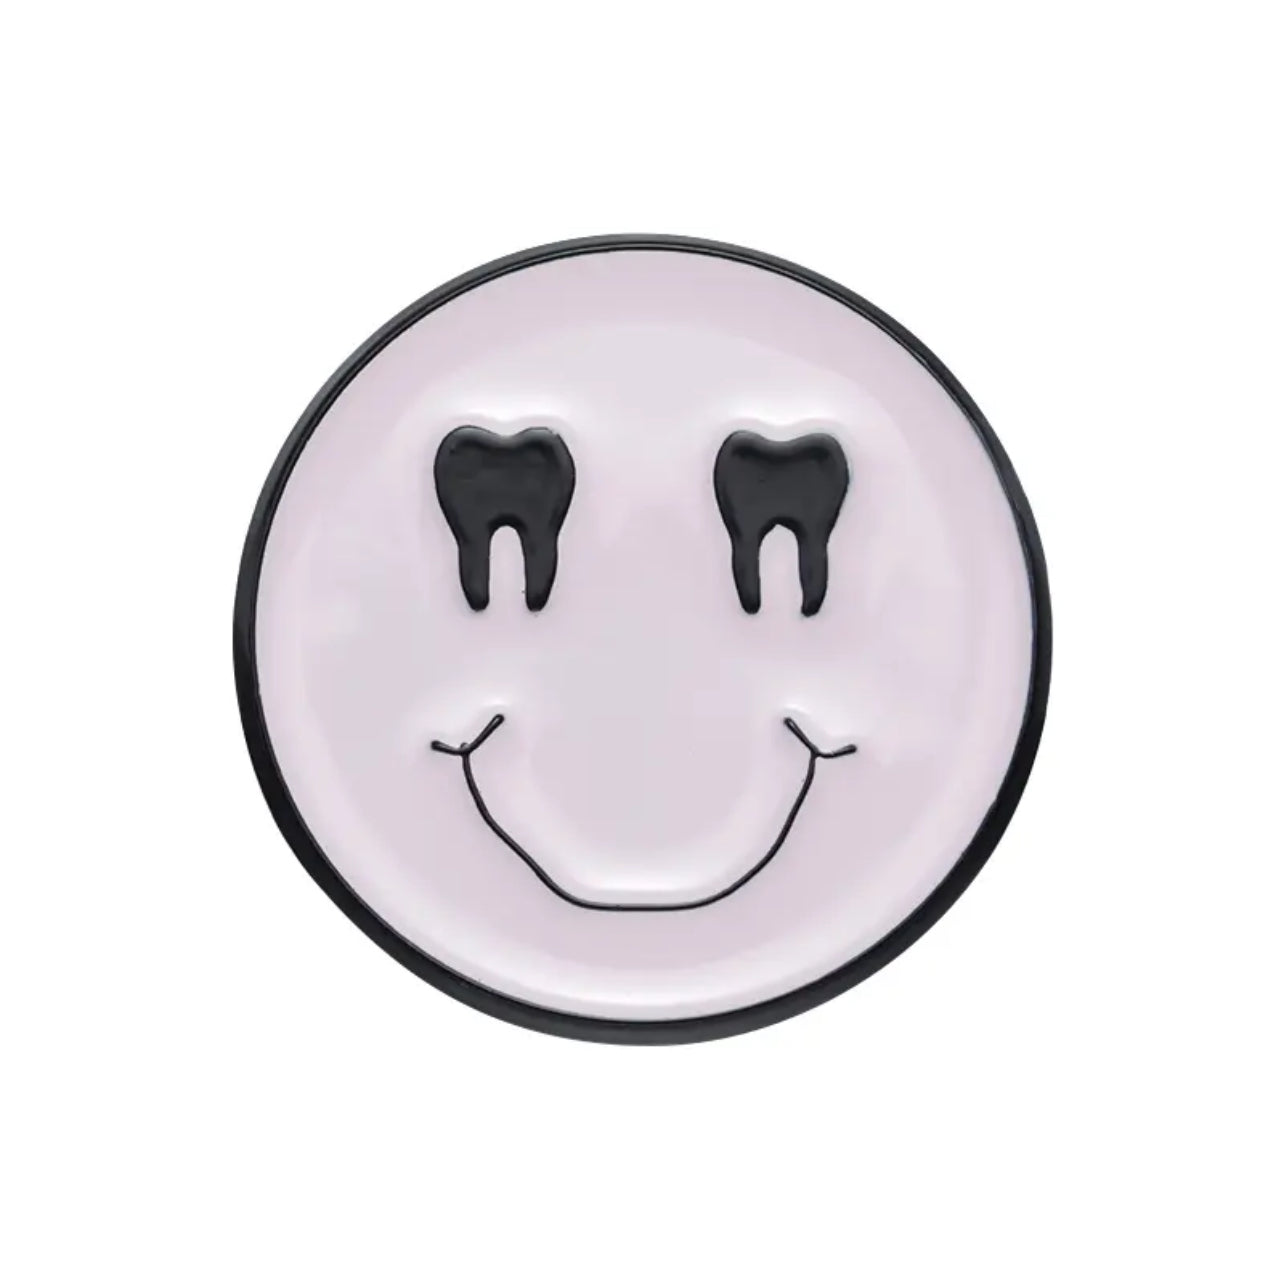 Dentist’s smiling face